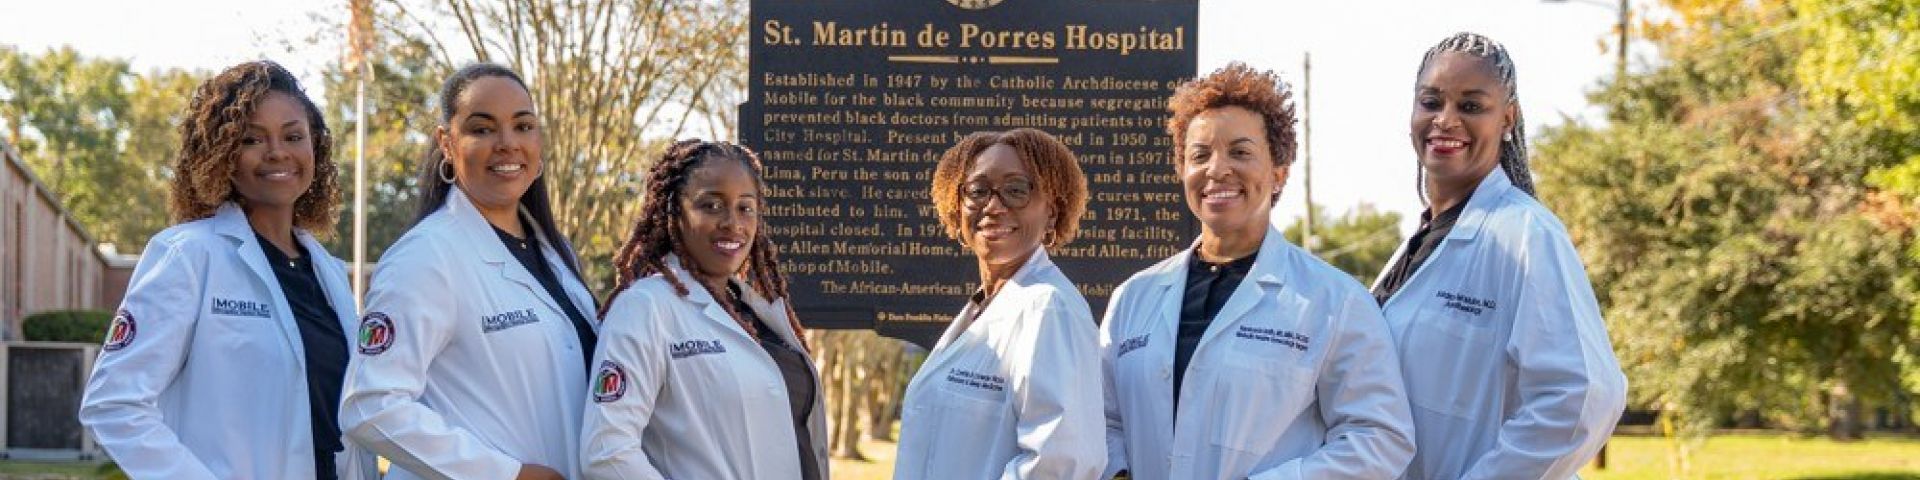 Mobile Metropolitan Medical Society donates $6,500 to women’s blood pressure monitoring program